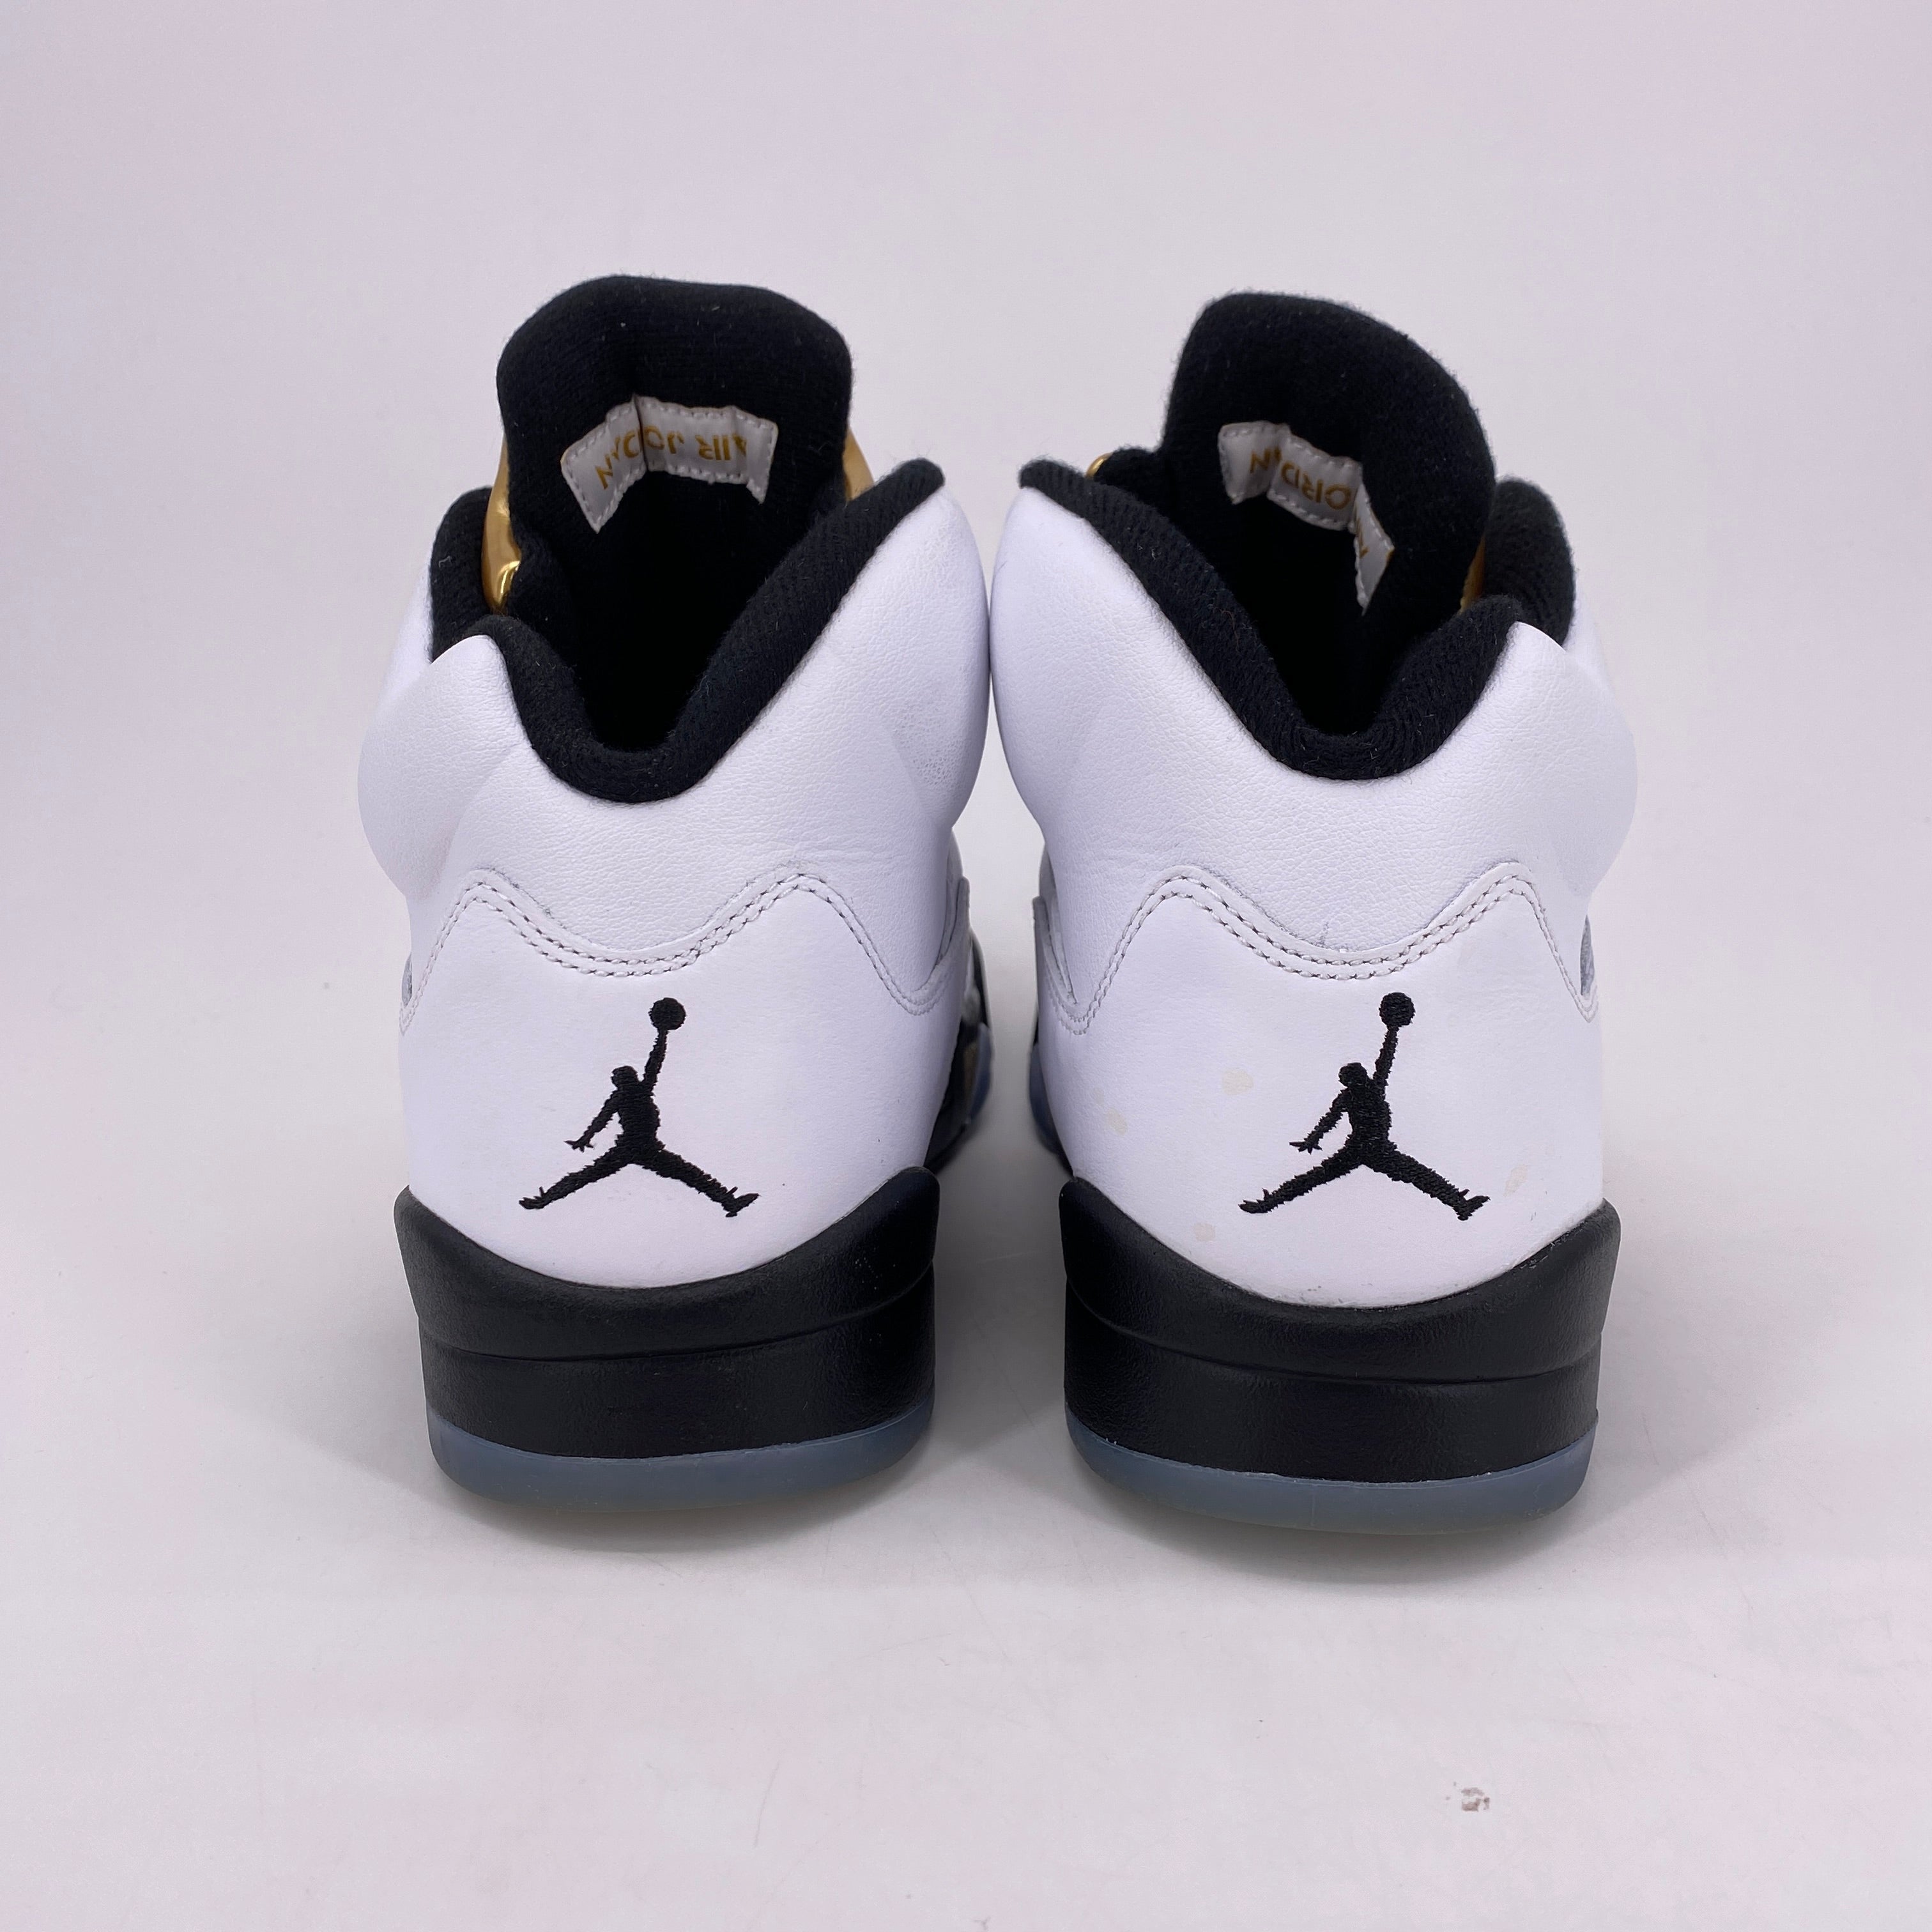 Air Jordan 5 Retro &quot;Olympic&quot; 2016 Used Size 7.5